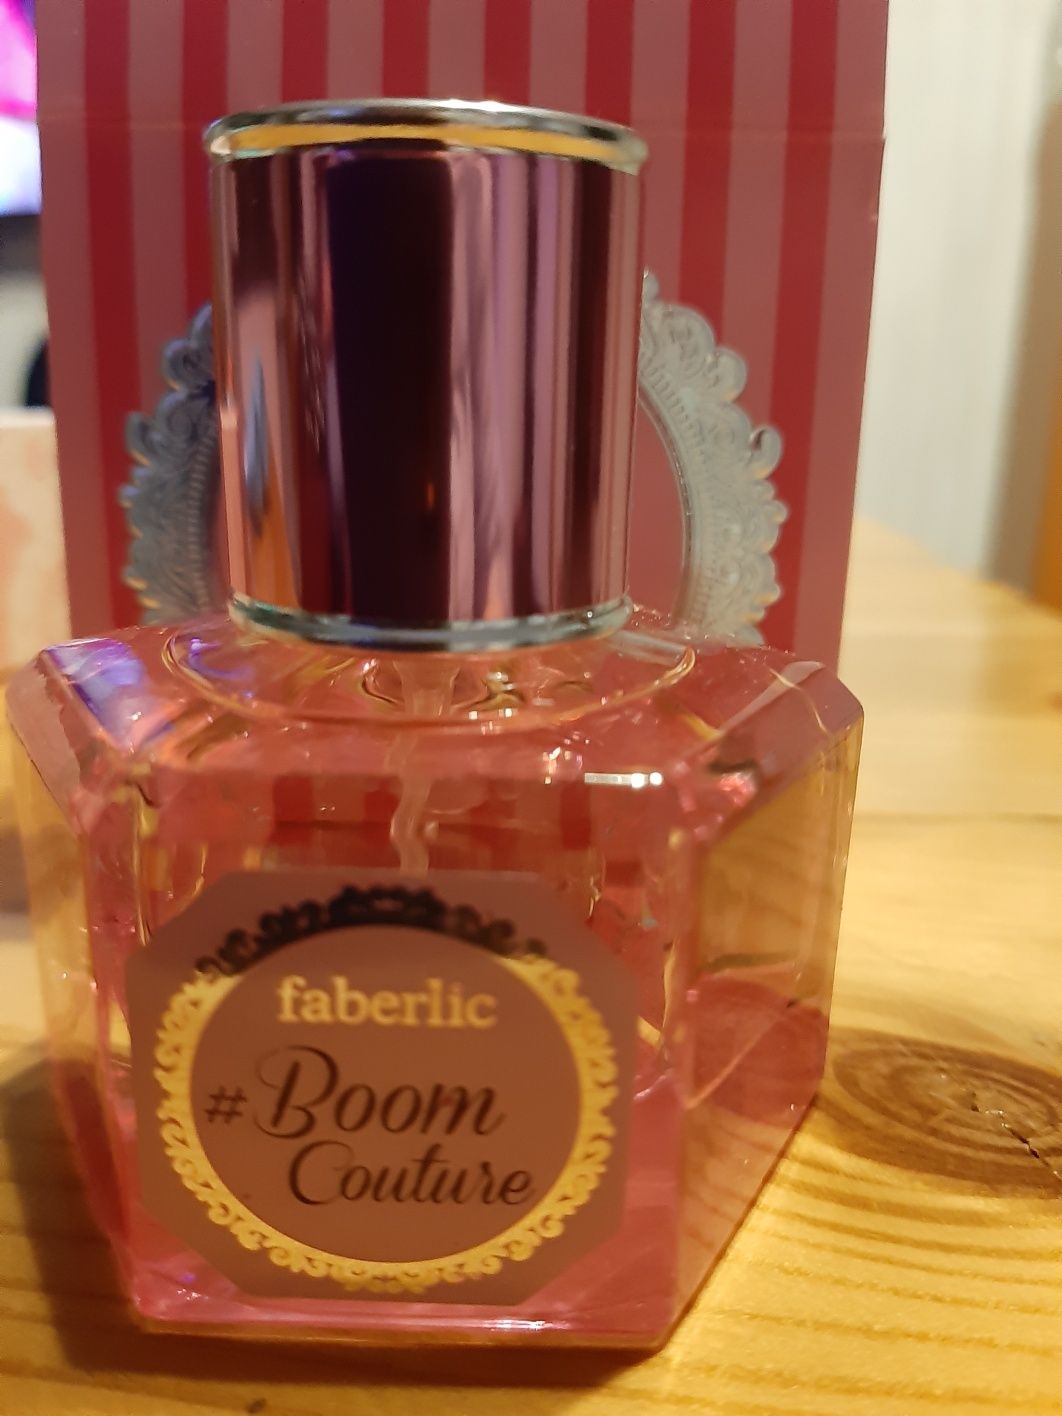 Boom Couture Faberlic